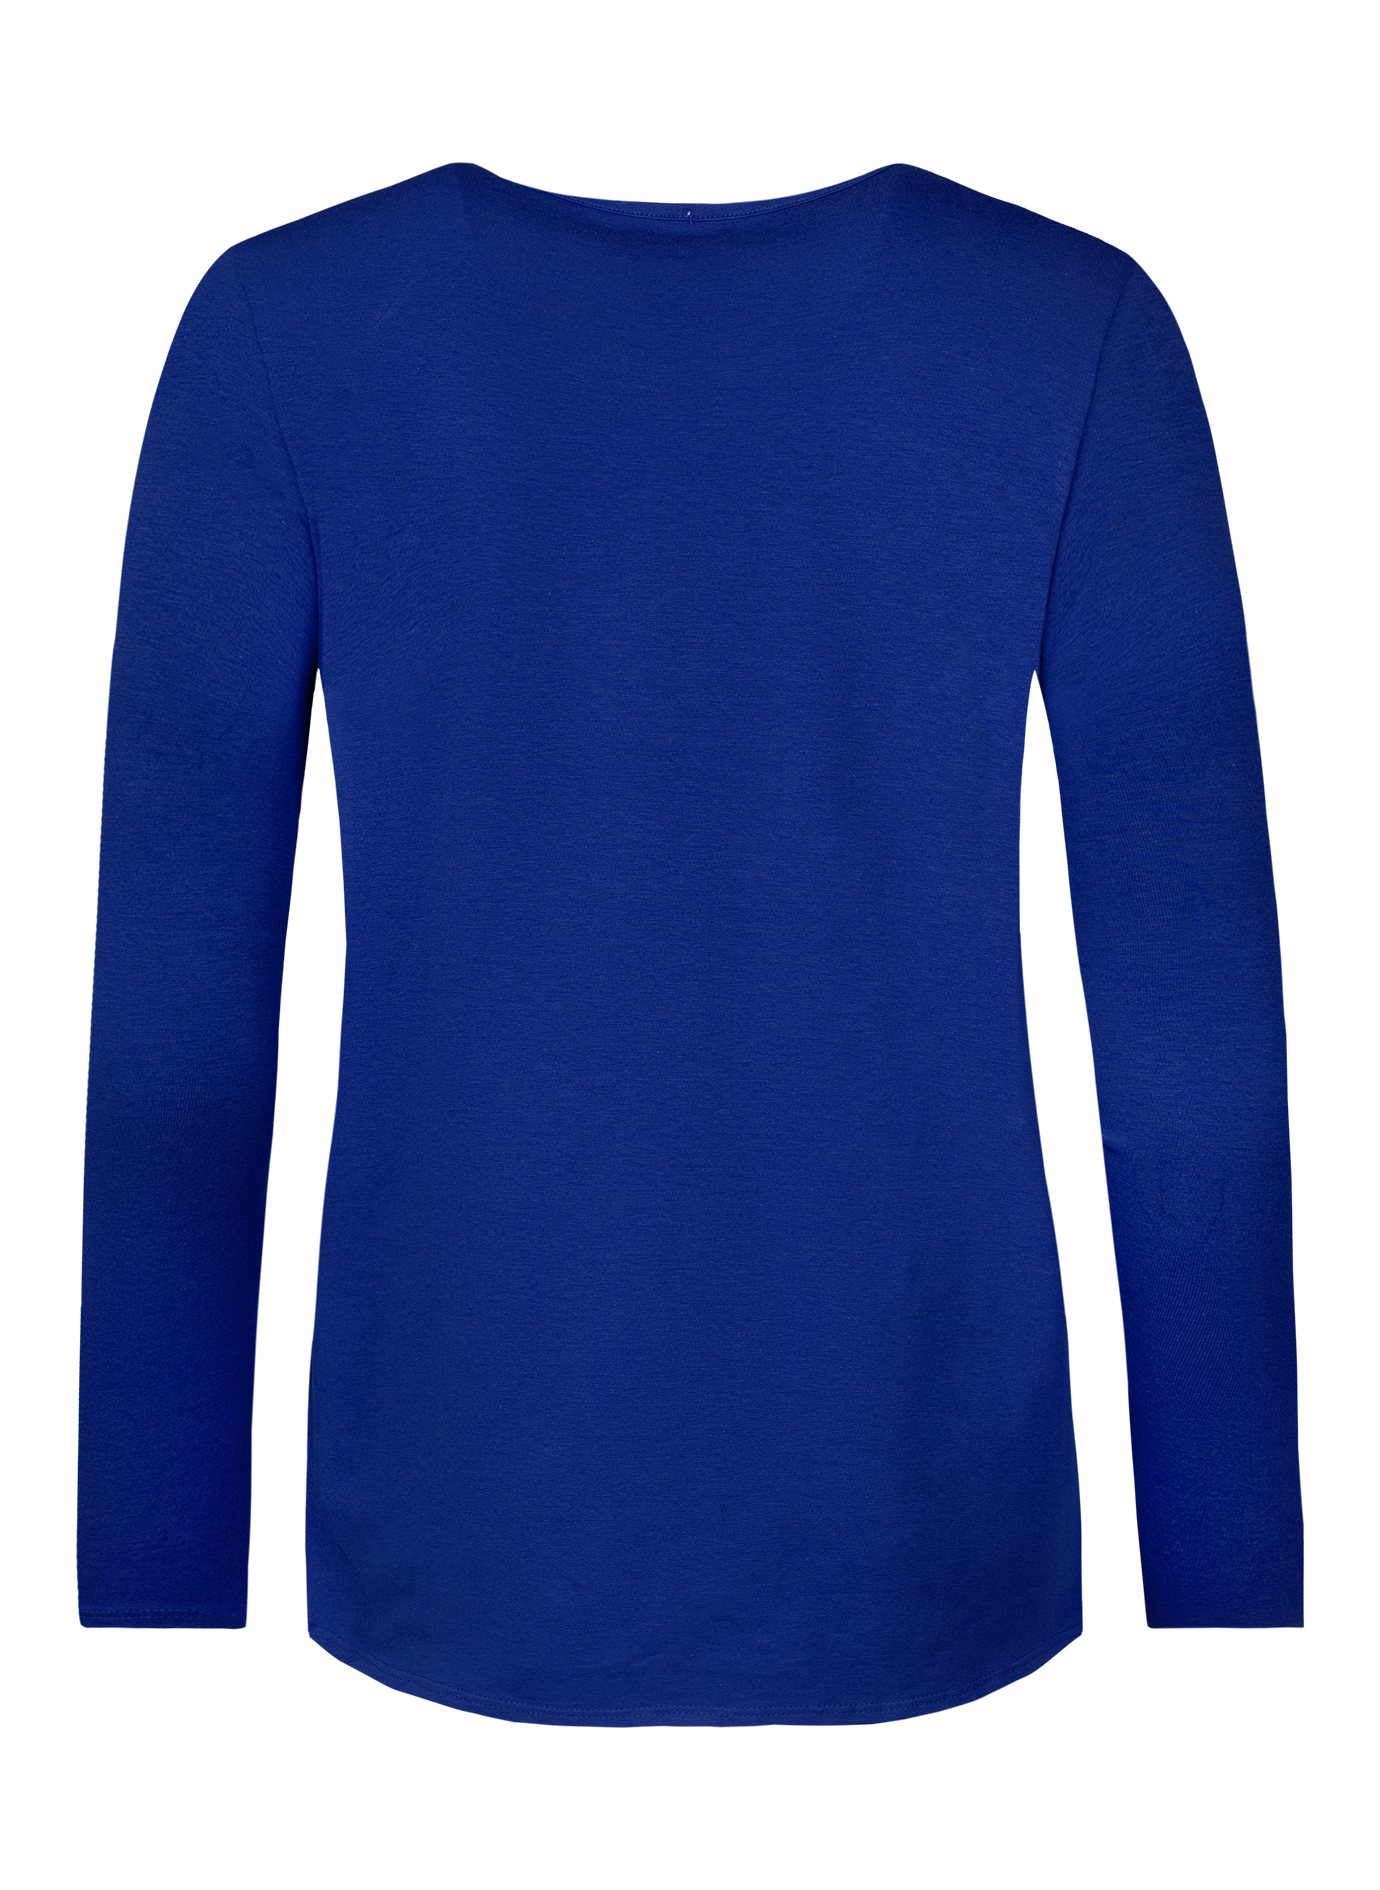 Damen-Langarmshirt Blau | XL 4060972811024 